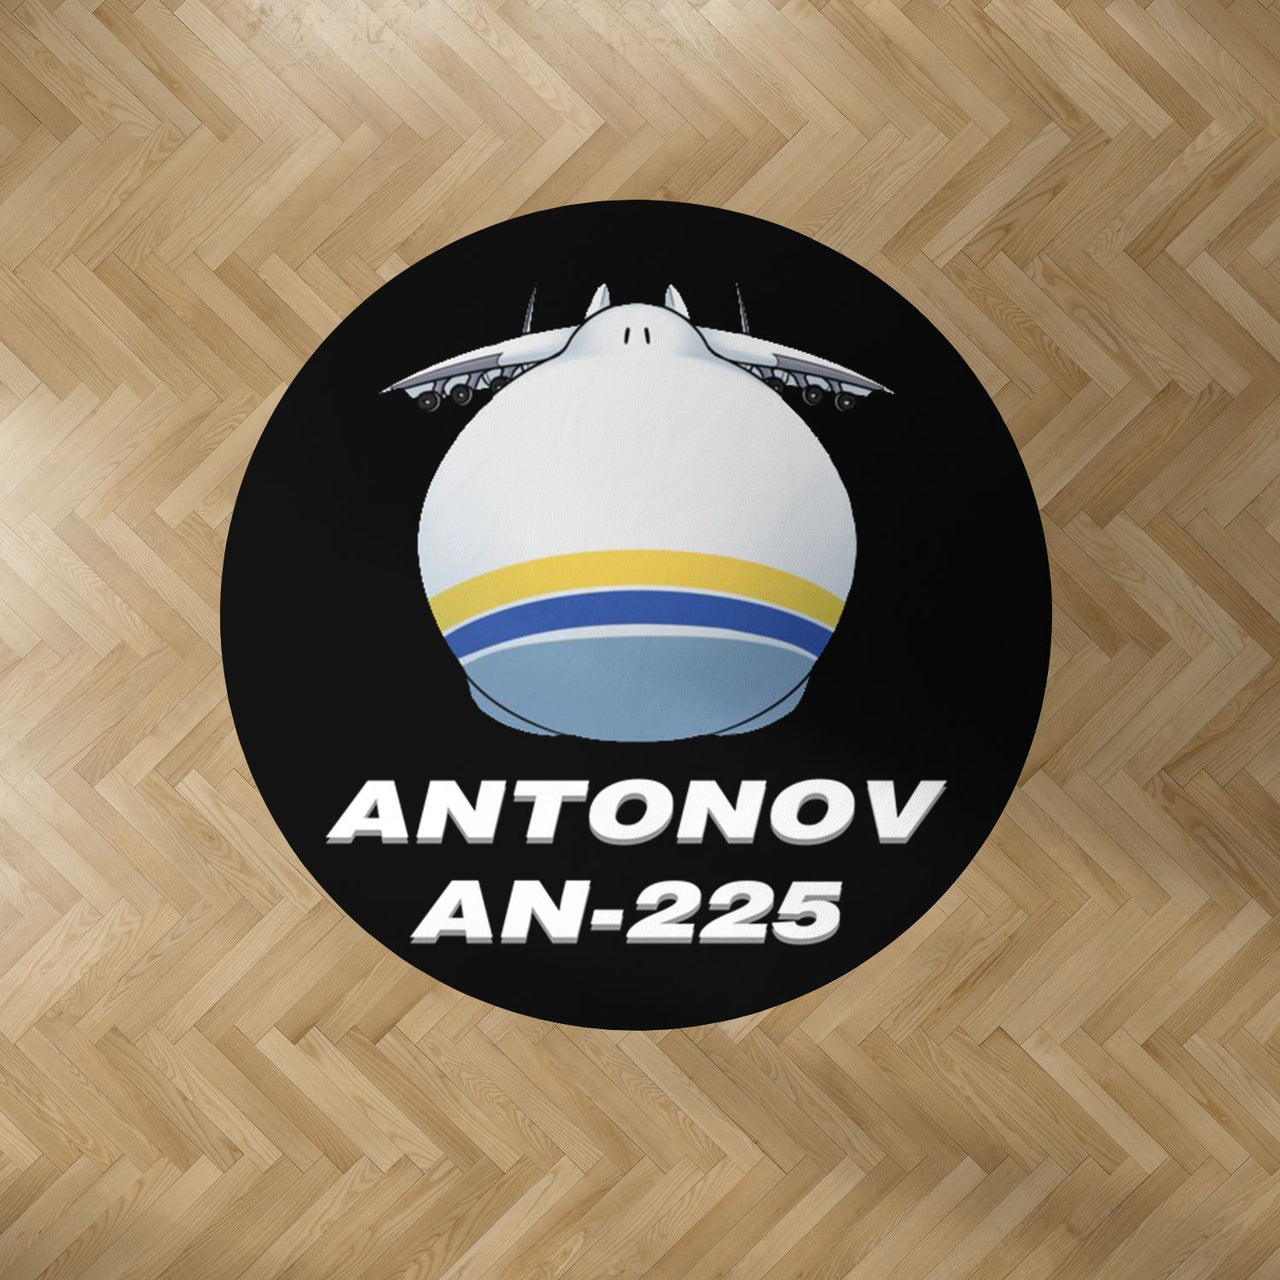 Antonov AN-225 (20) Designed Carpet & Floor Mats (Round)